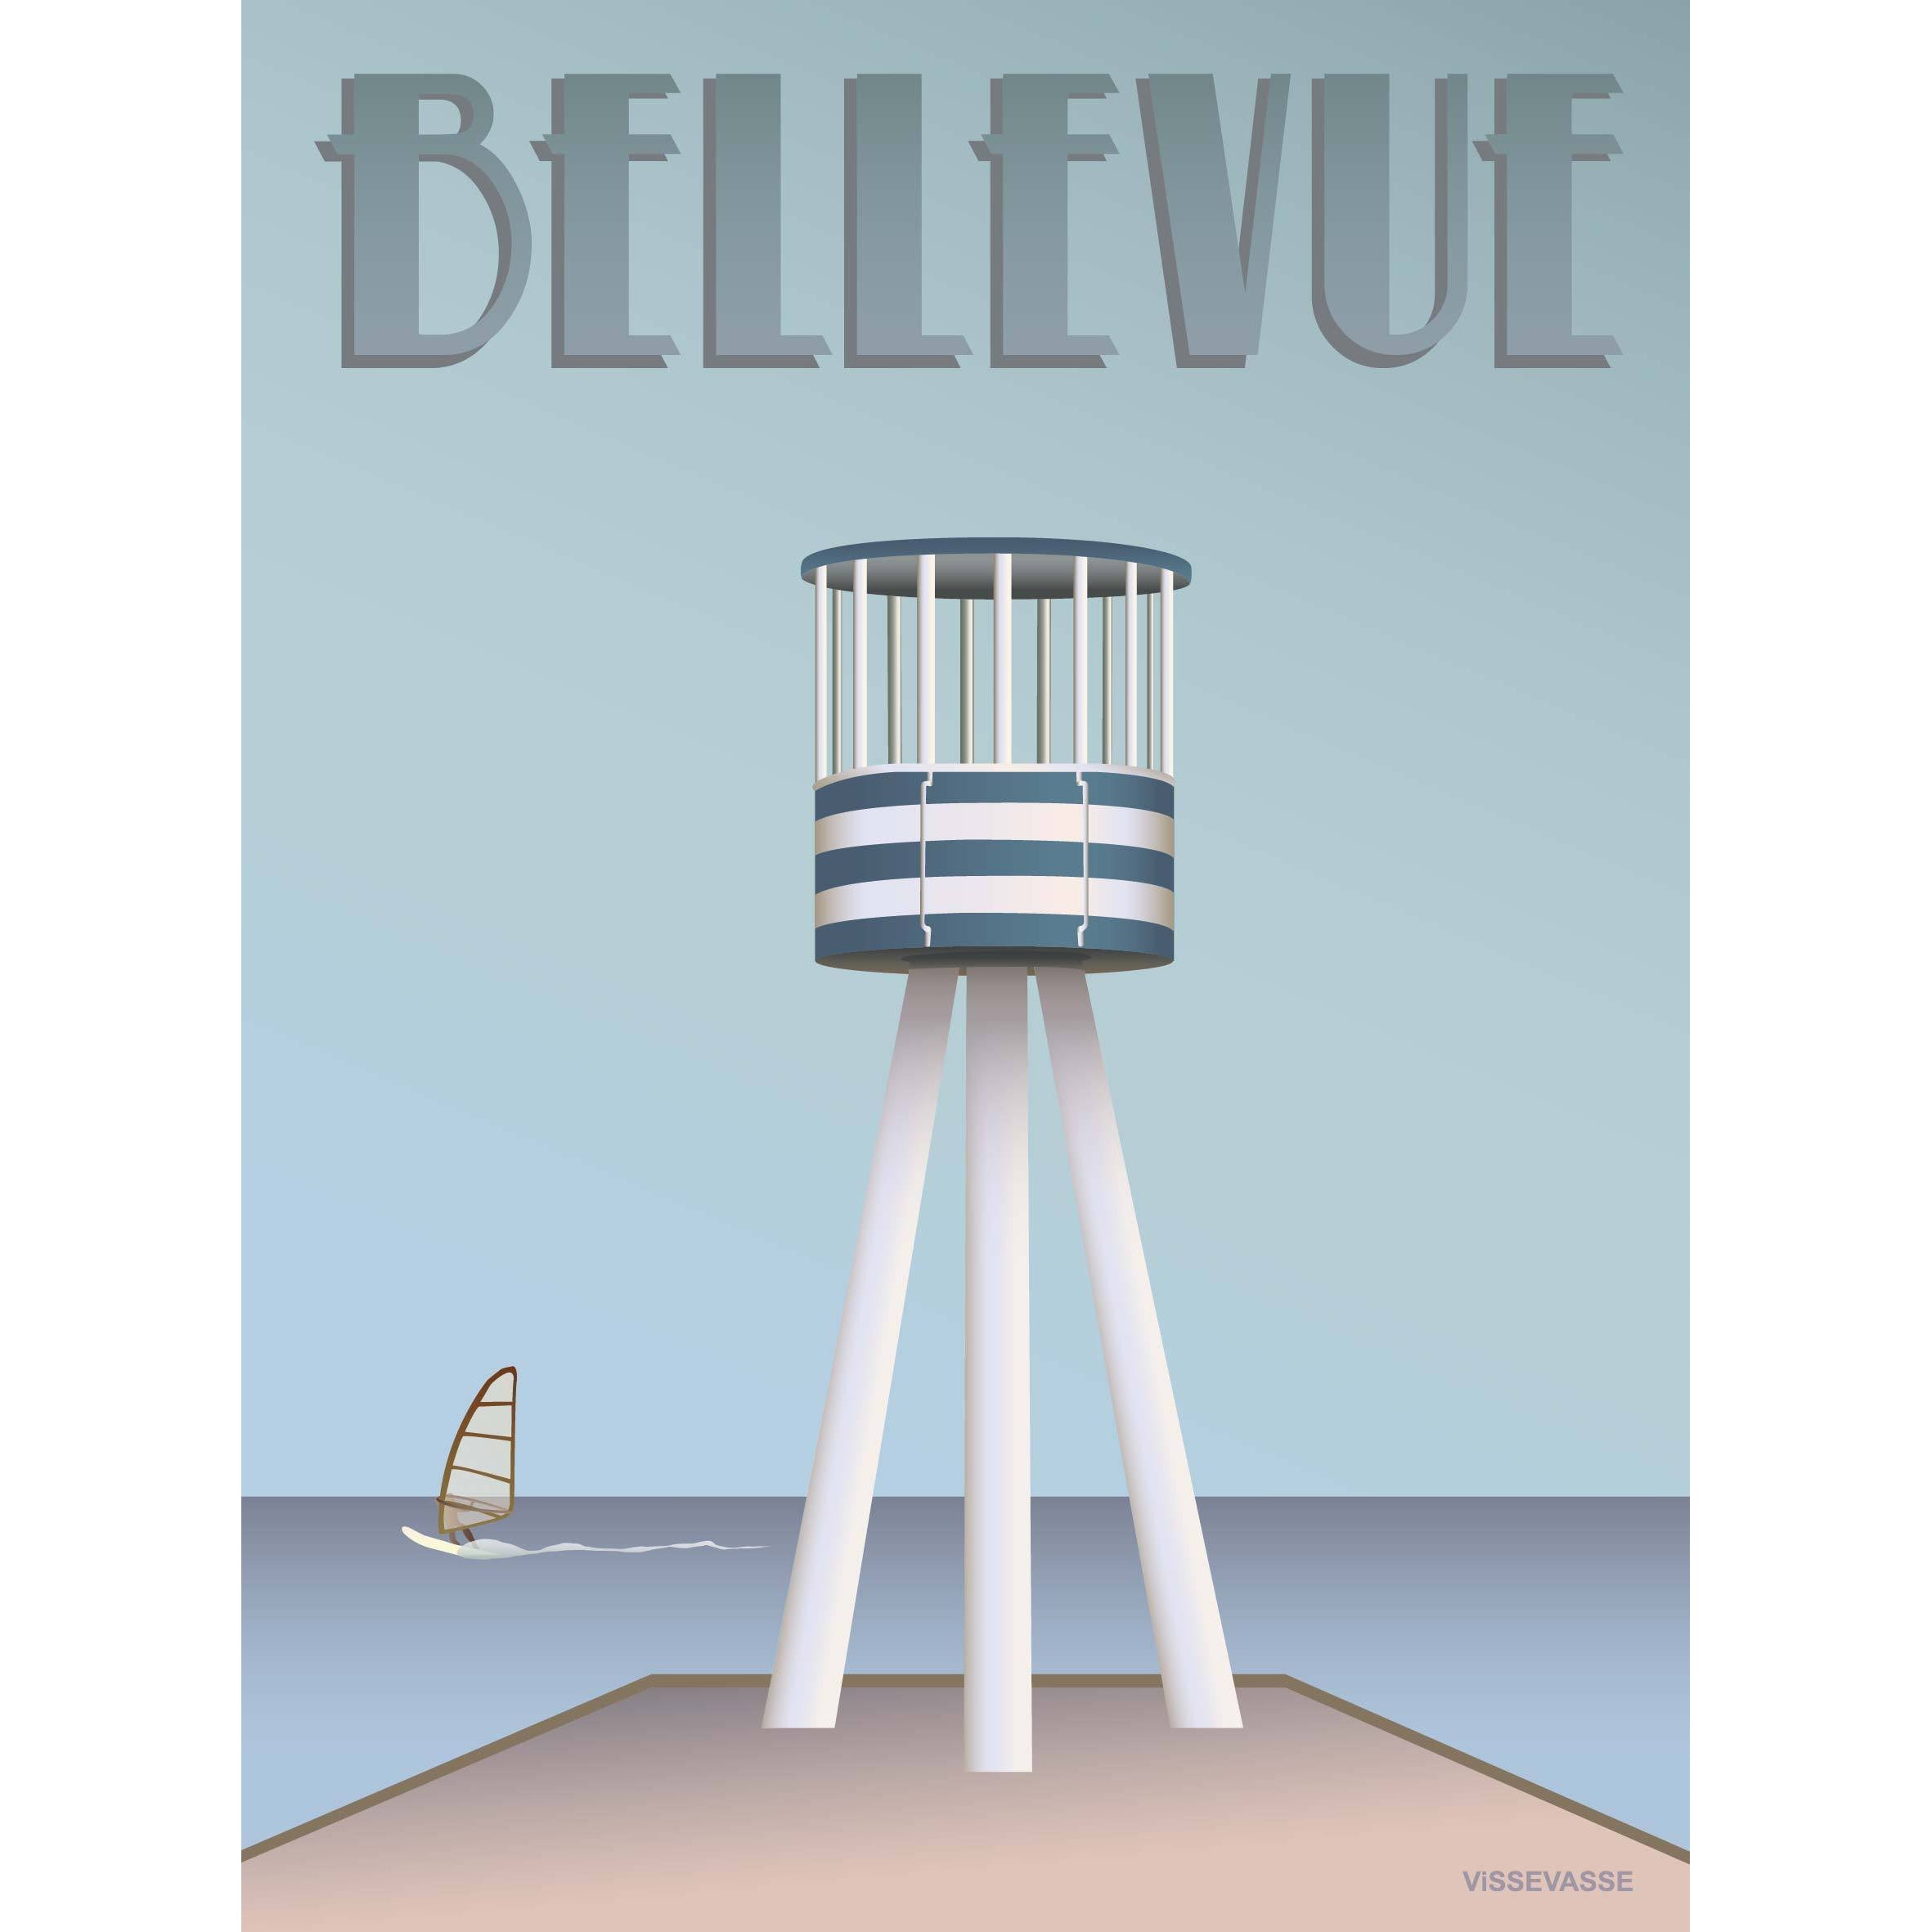 Vissevasse Bellevue Lifeguard Tower plakat, 15 x21 cm